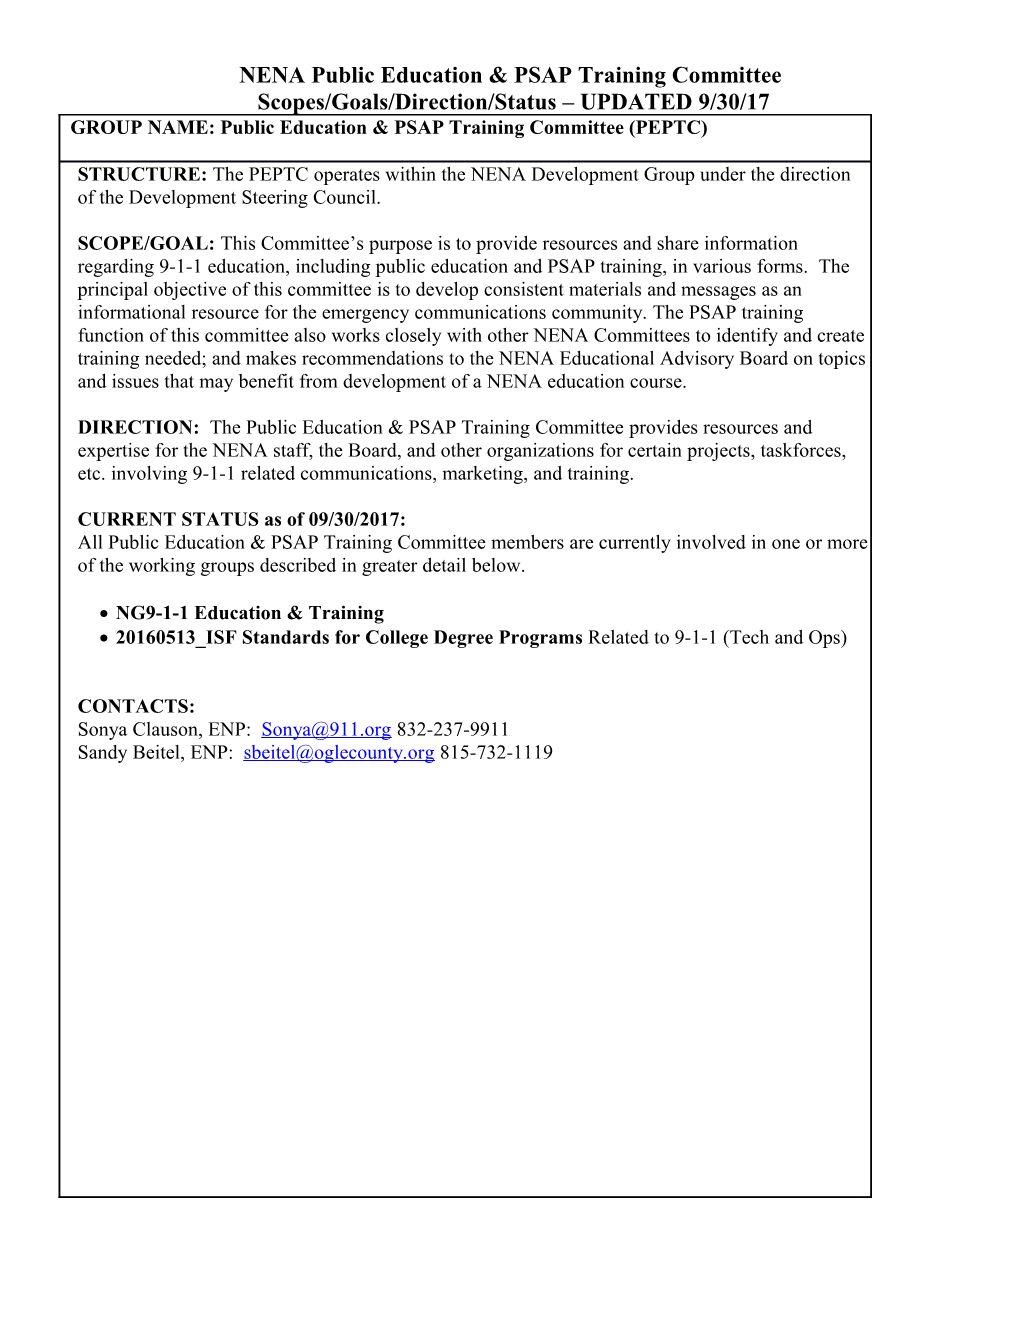 NENA Public Education & PSAP Training Committee Scopes/Goals/Direction/Status UPDATED 9/30/17